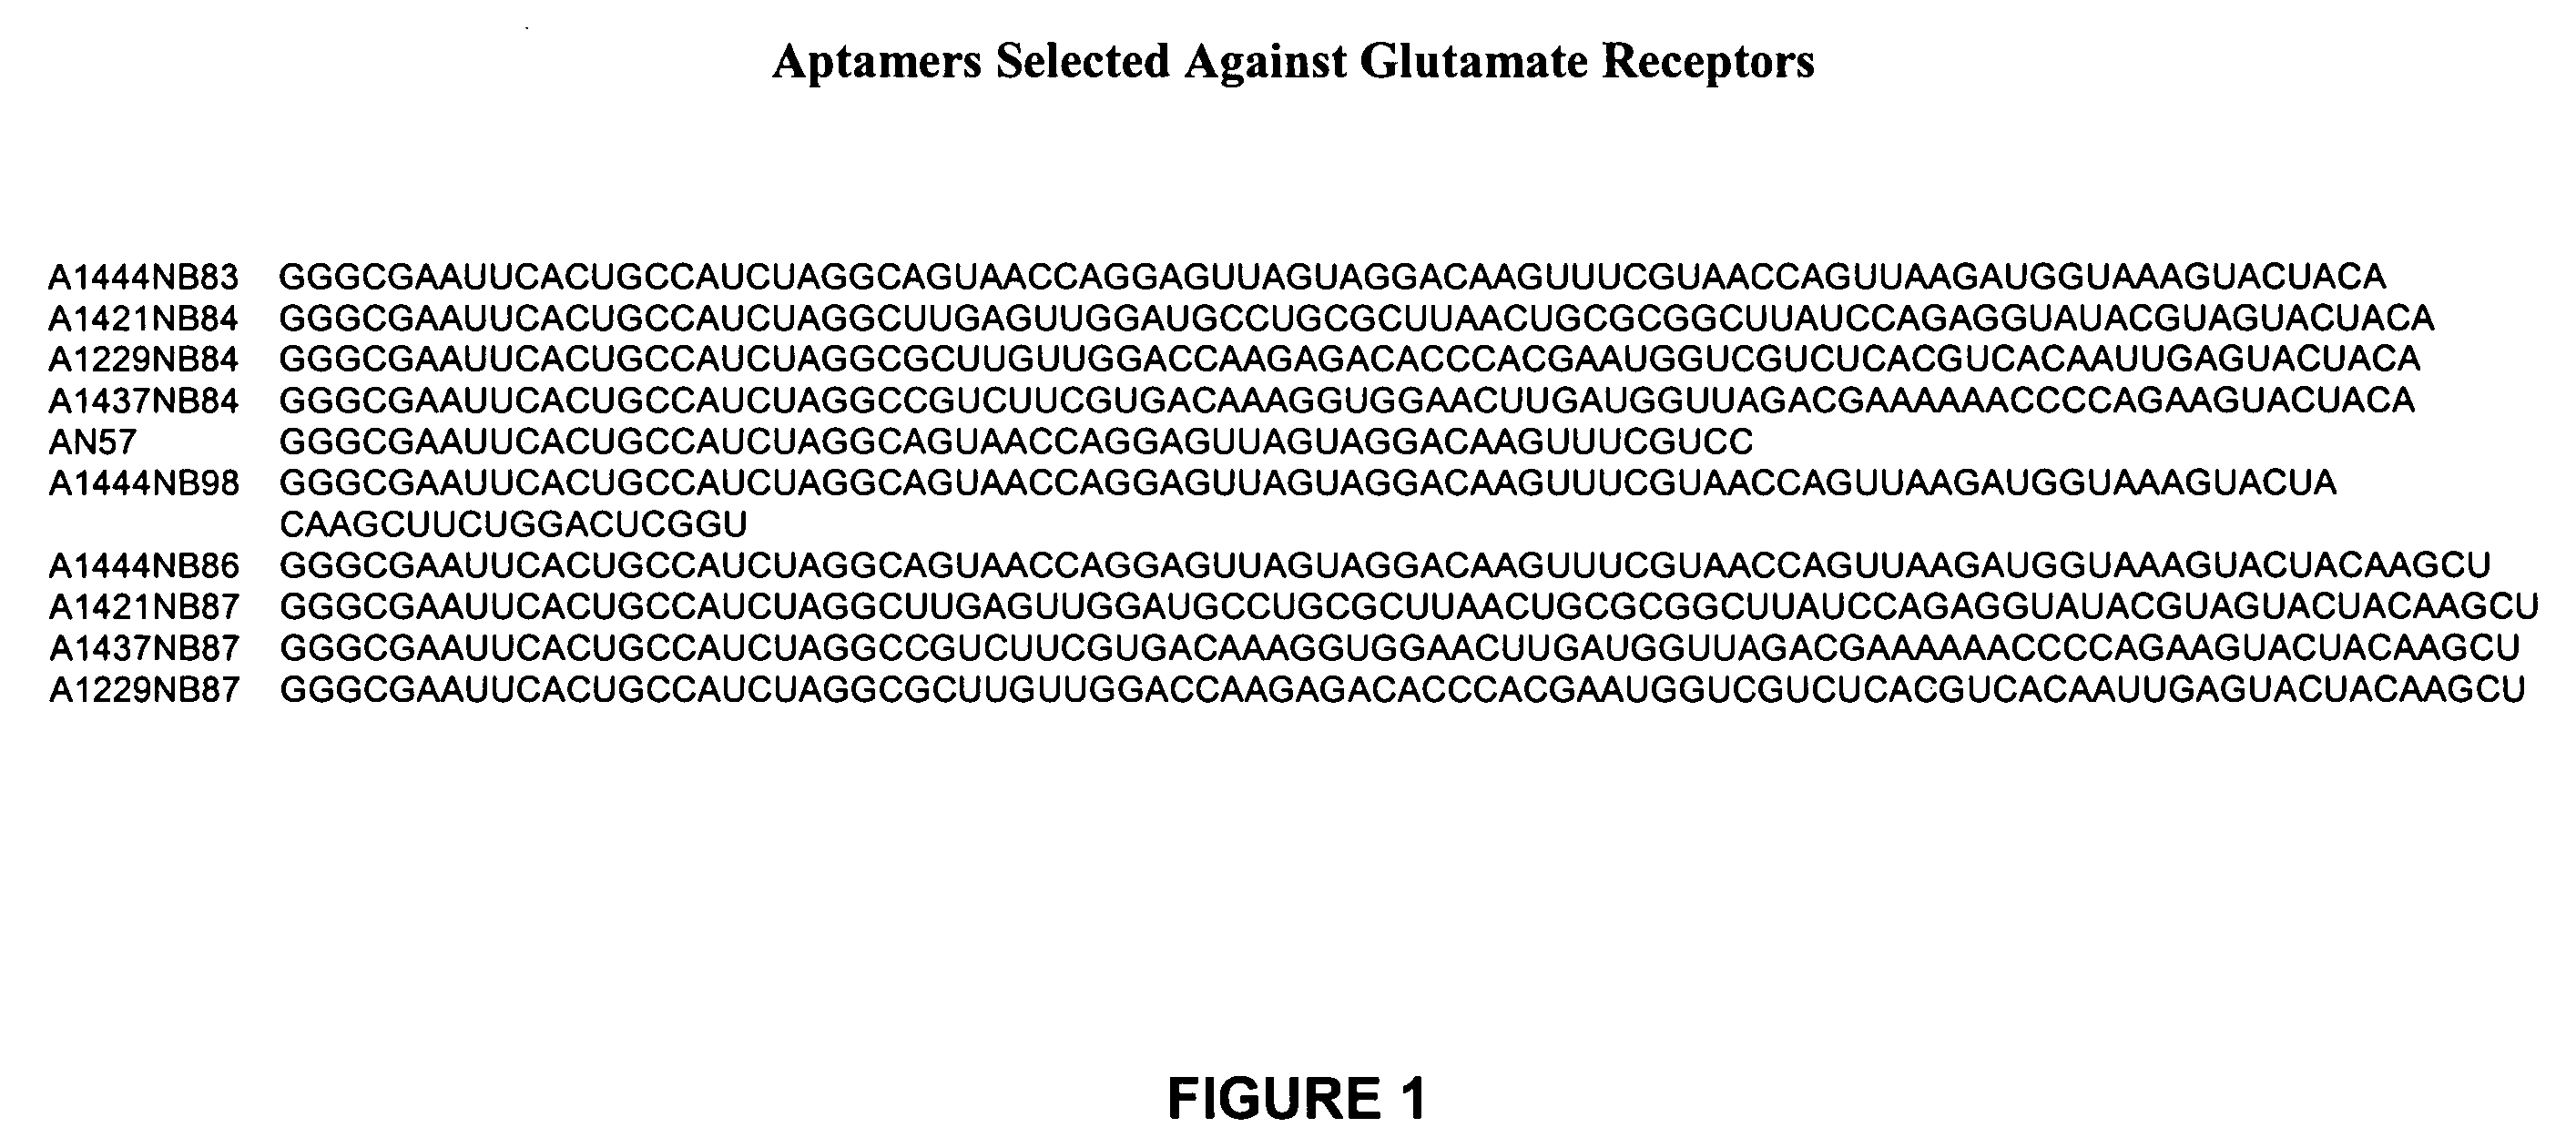 Nucleic acid inhibitors of glutamate receptors